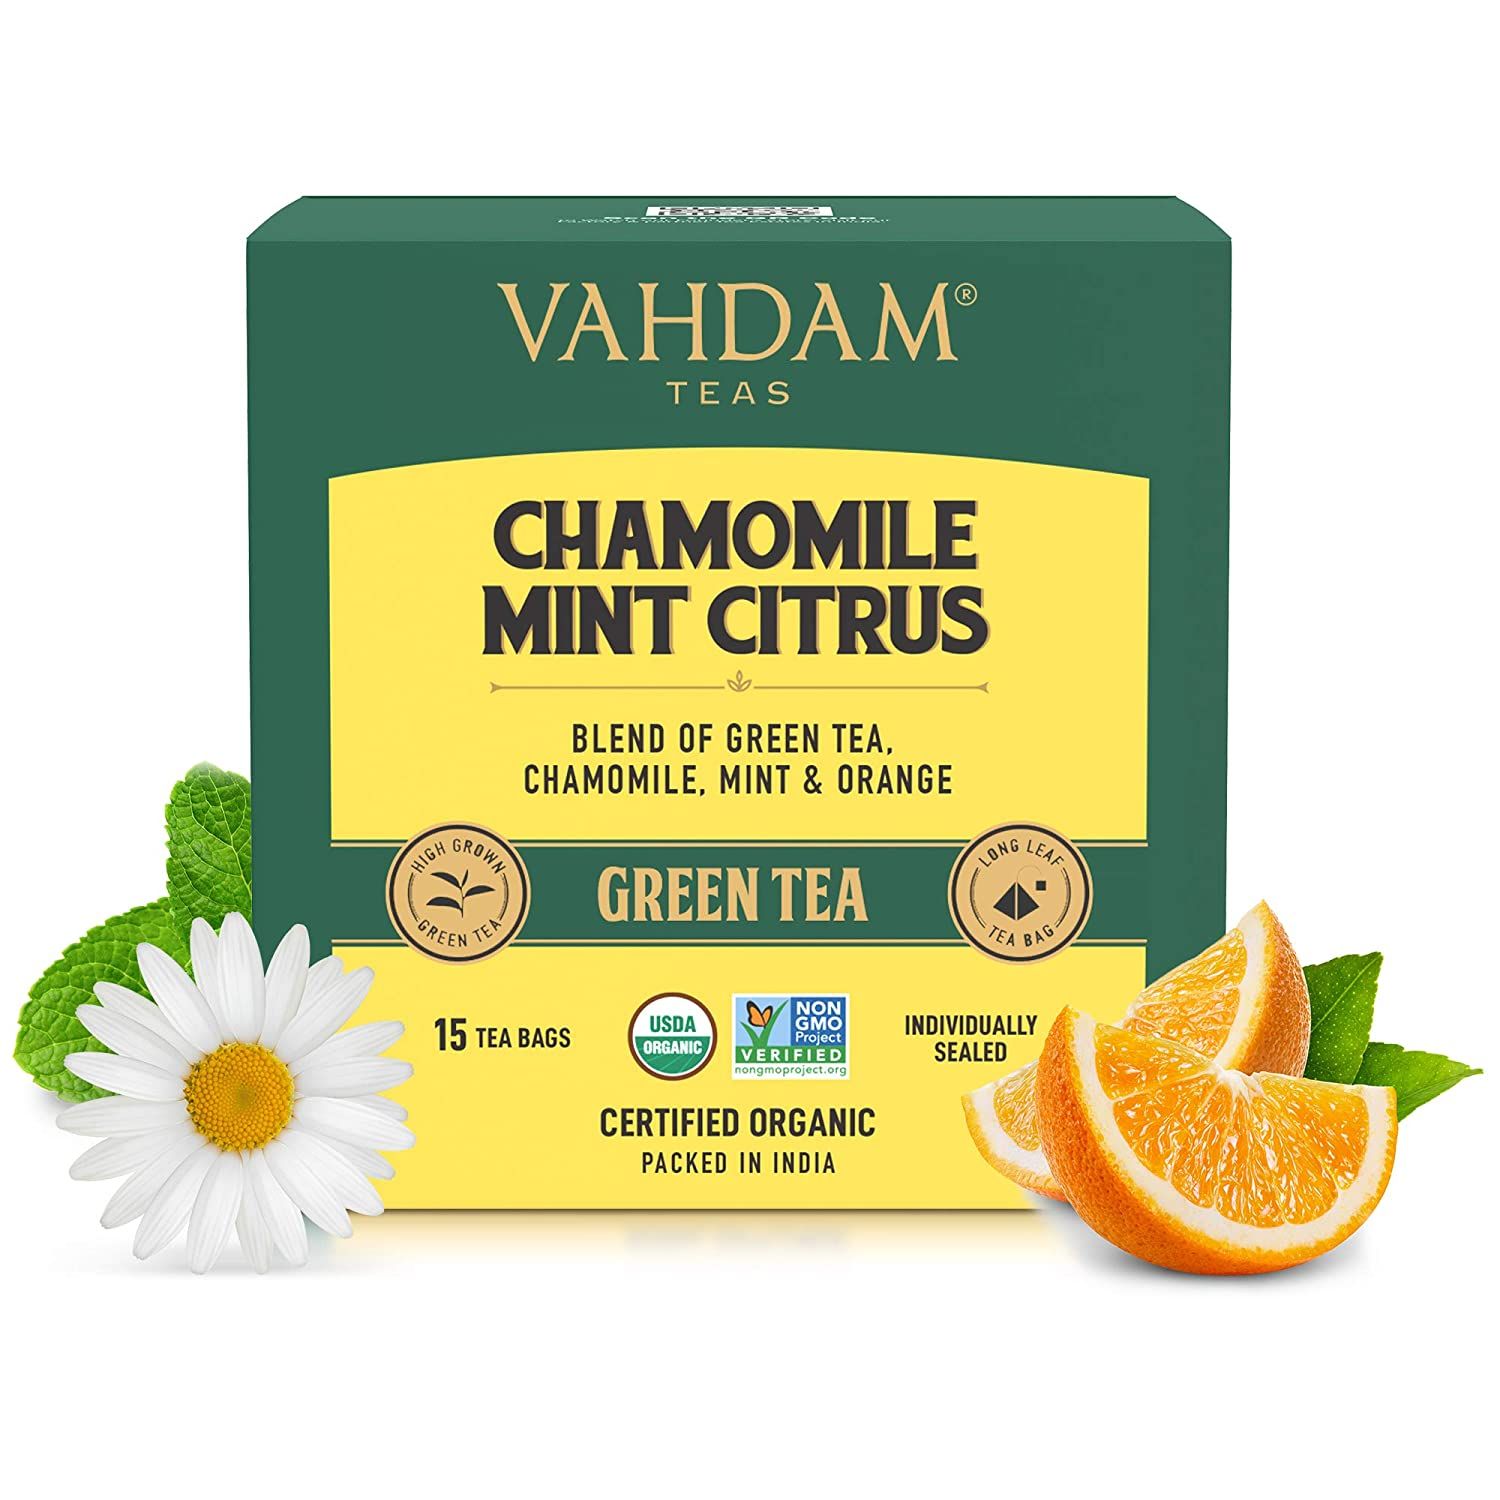 Vahdam Organic Chamomile Green Tea With Mint Image